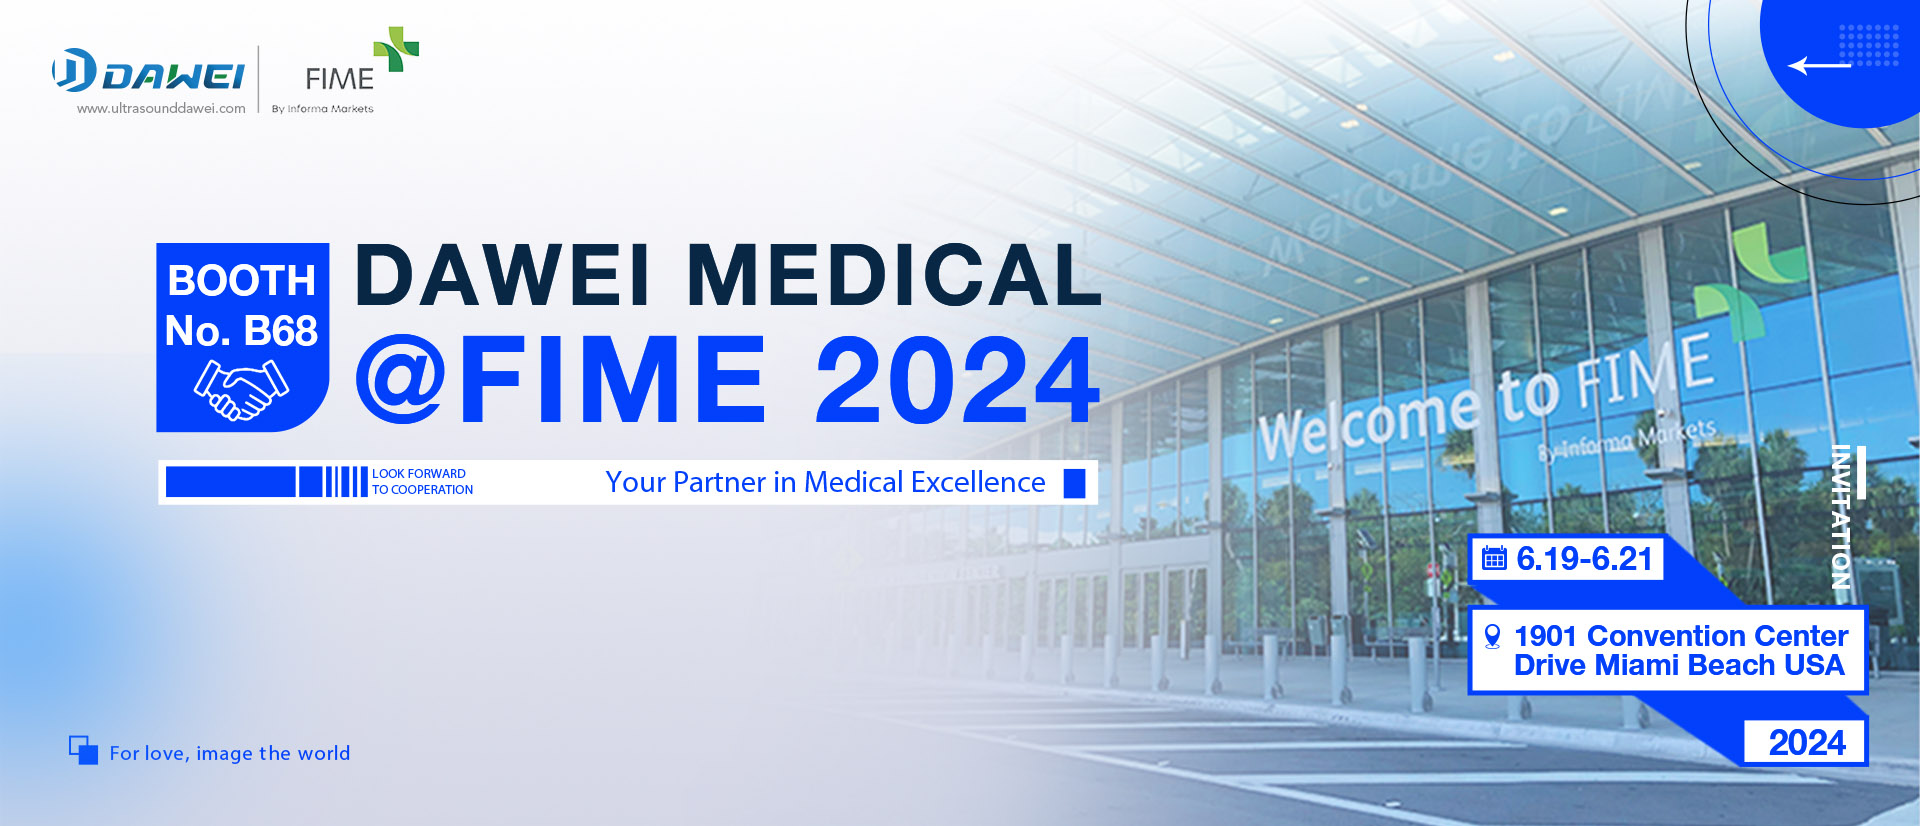 Dawei Medical FIME 2024